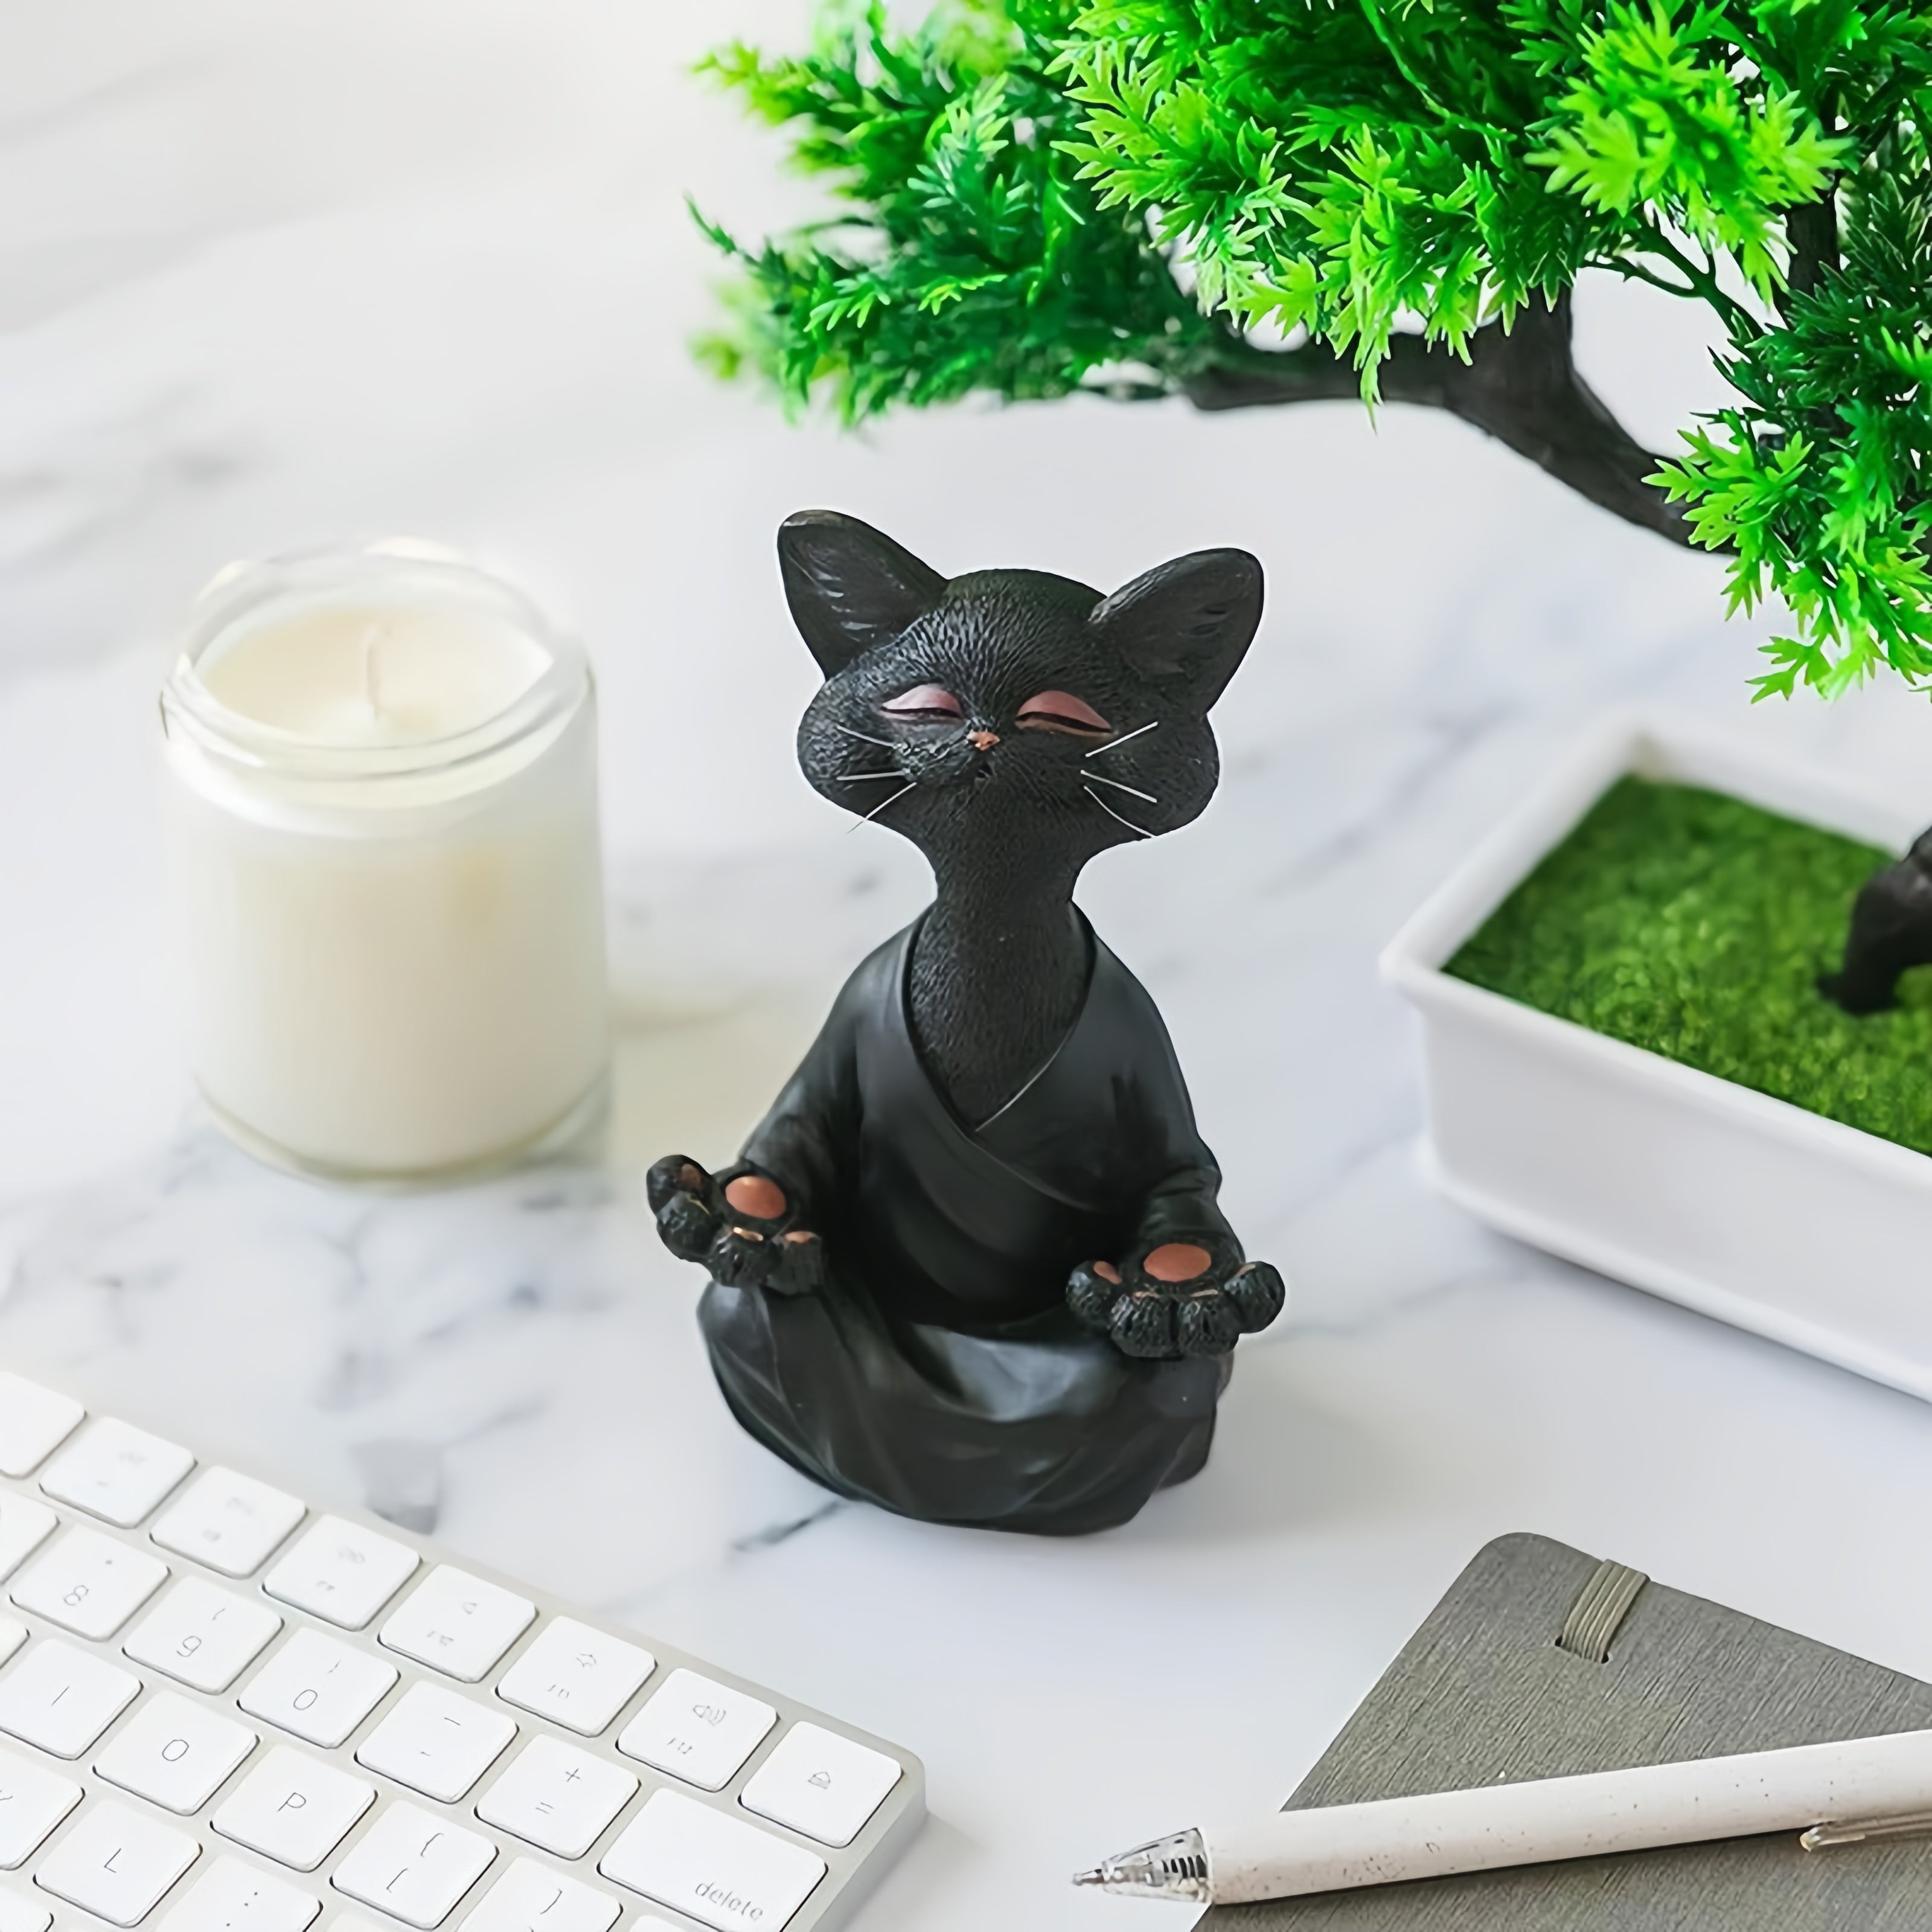 Meditation cat statue on a desk